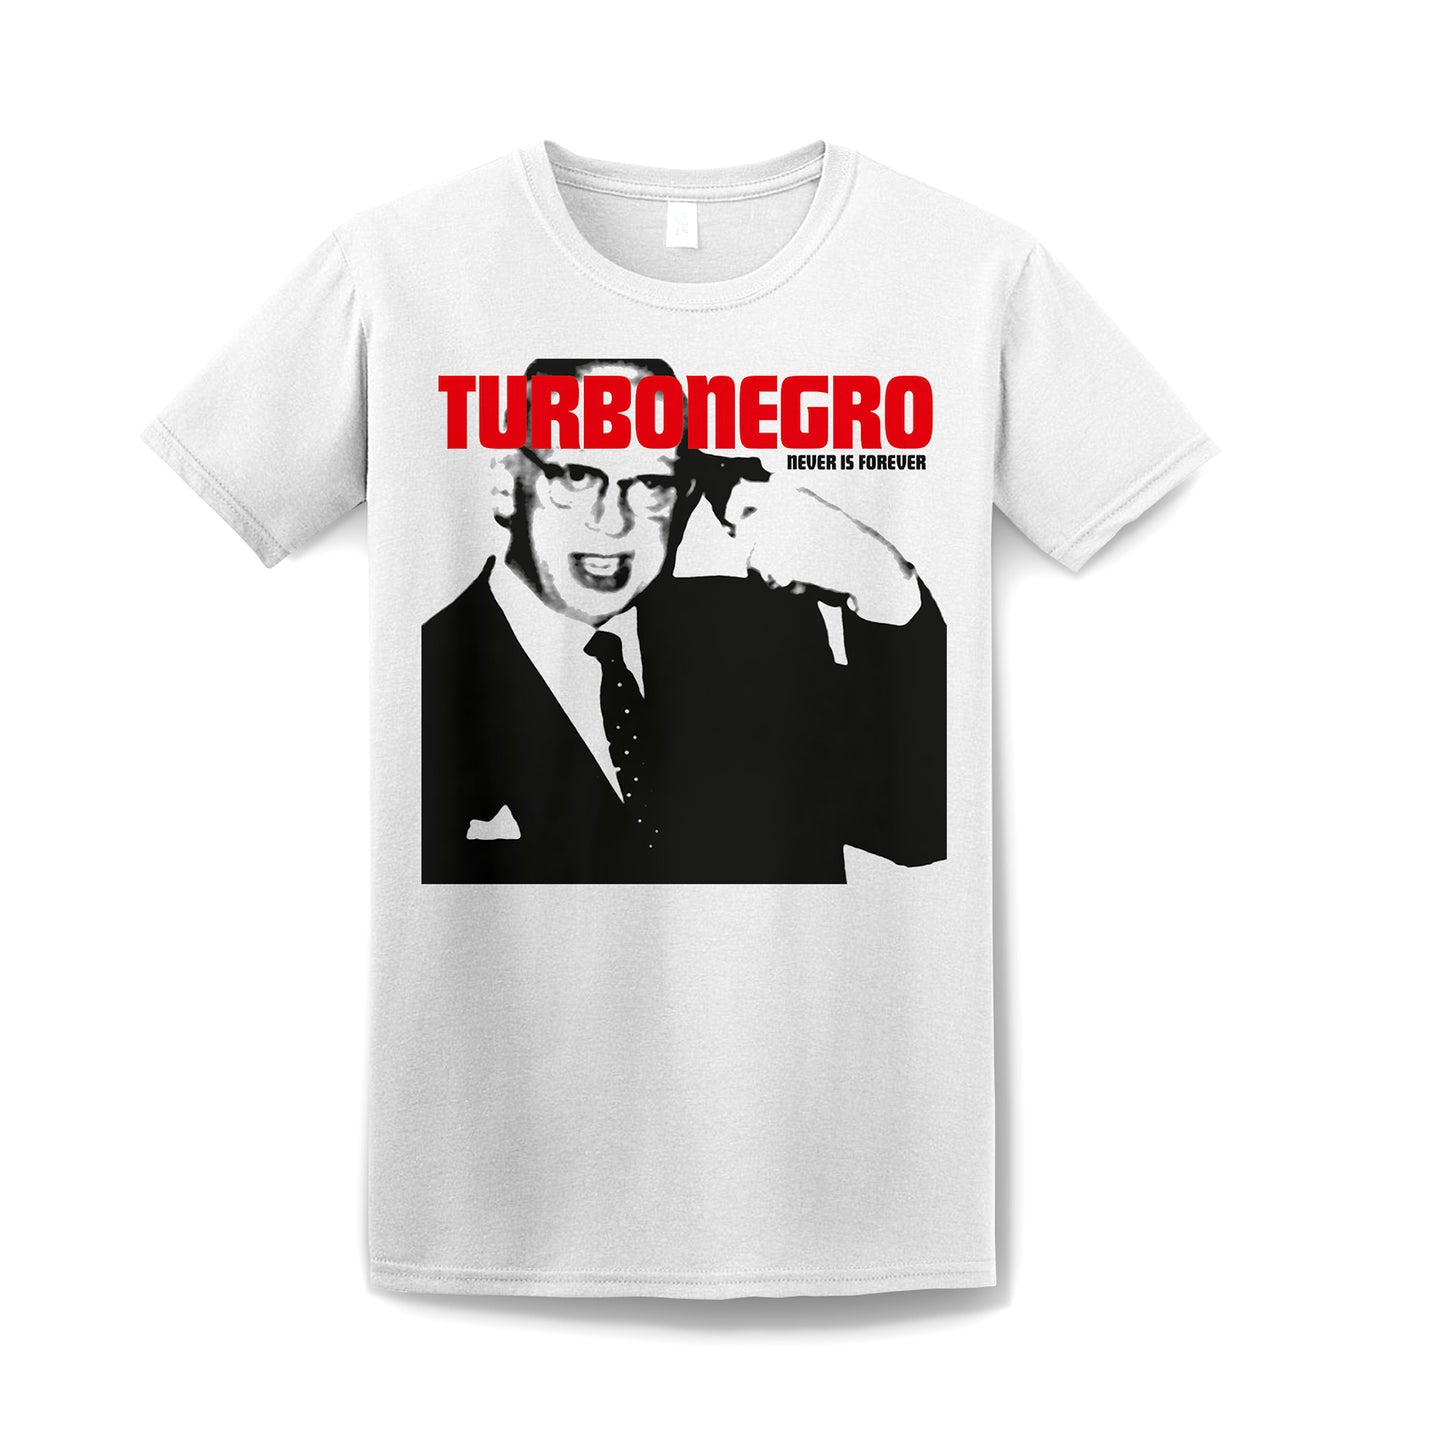 TURBONEGRO - Never is Forever (T-shirt)